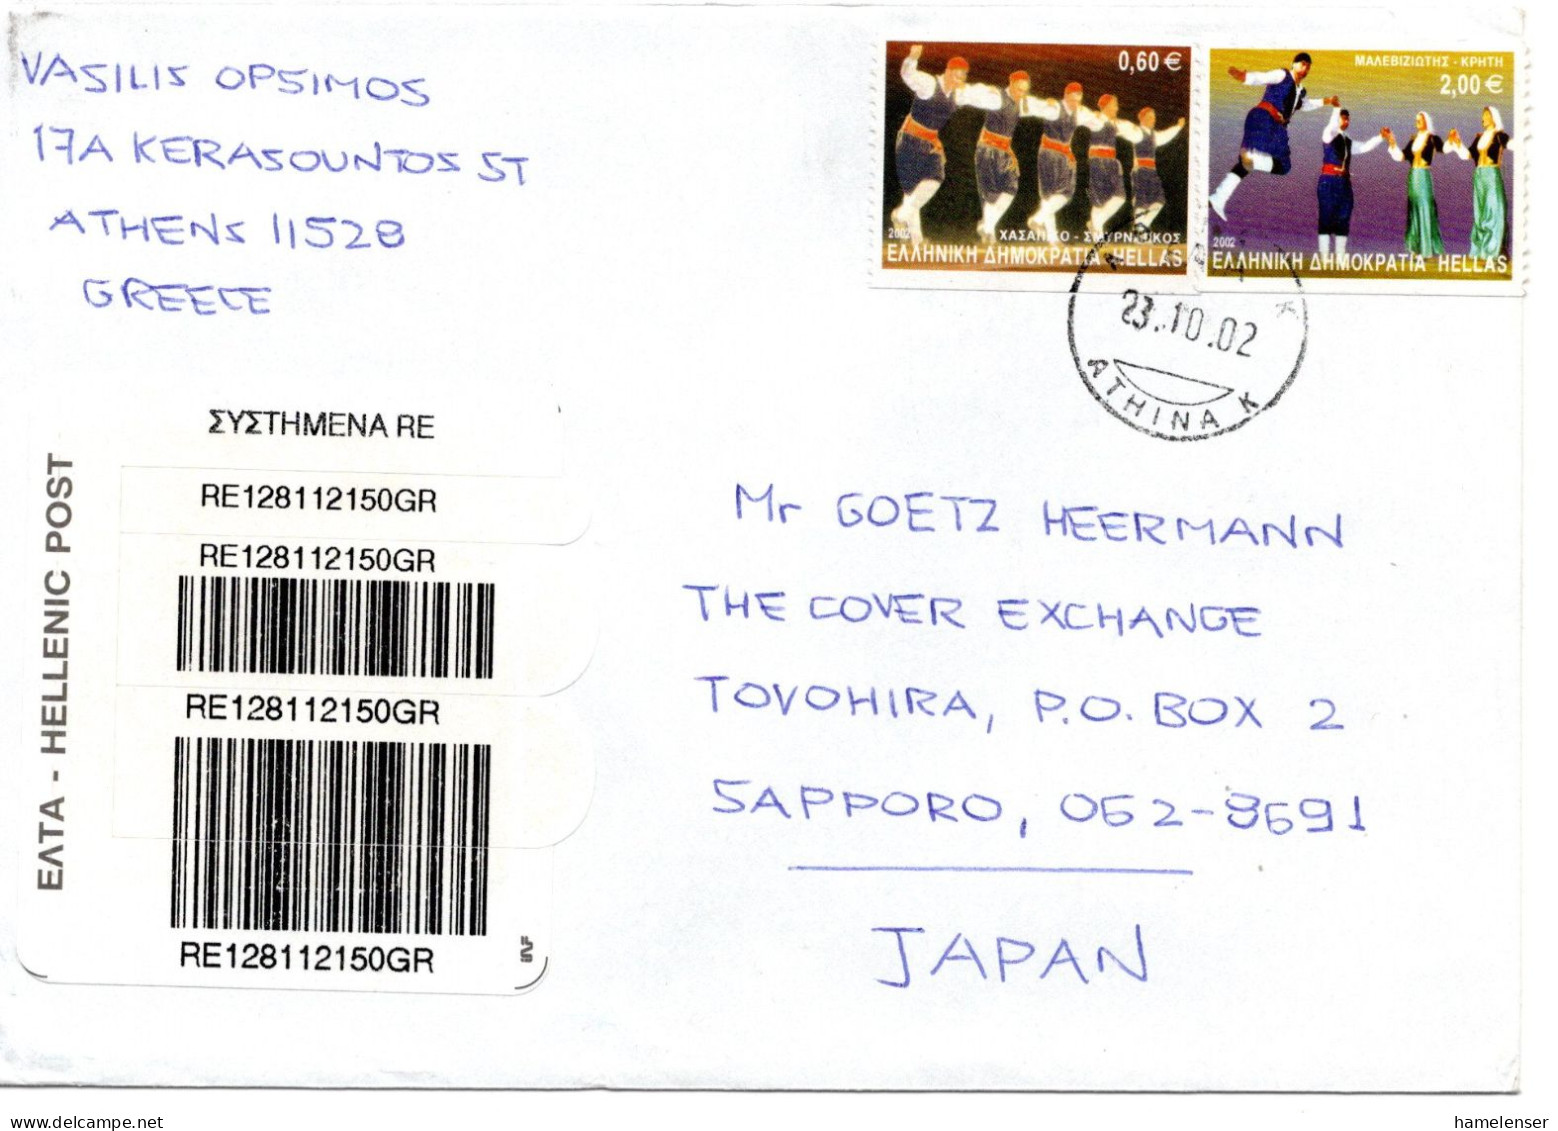 67102 - Griechenland - 2002 - €2,00 Volkstanz MiF A R-Bf ATHINA -> Japan - Briefe U. Dokumente